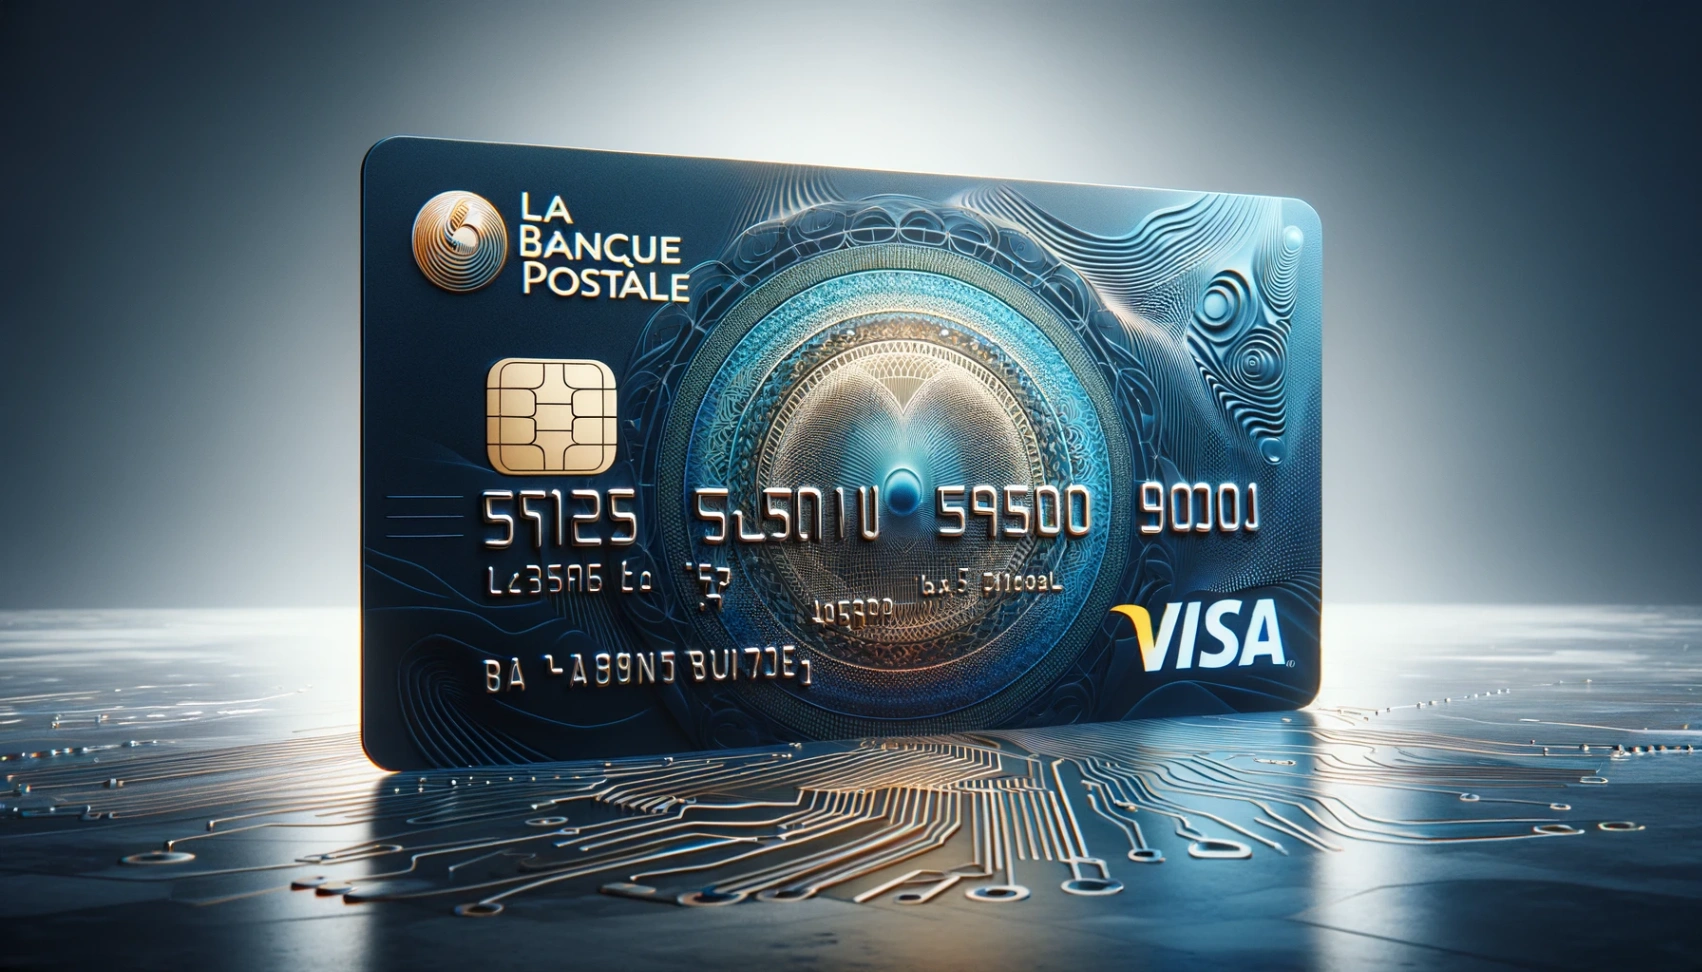 La Banque Postale Visa Classic: Your Guide to Online Application 